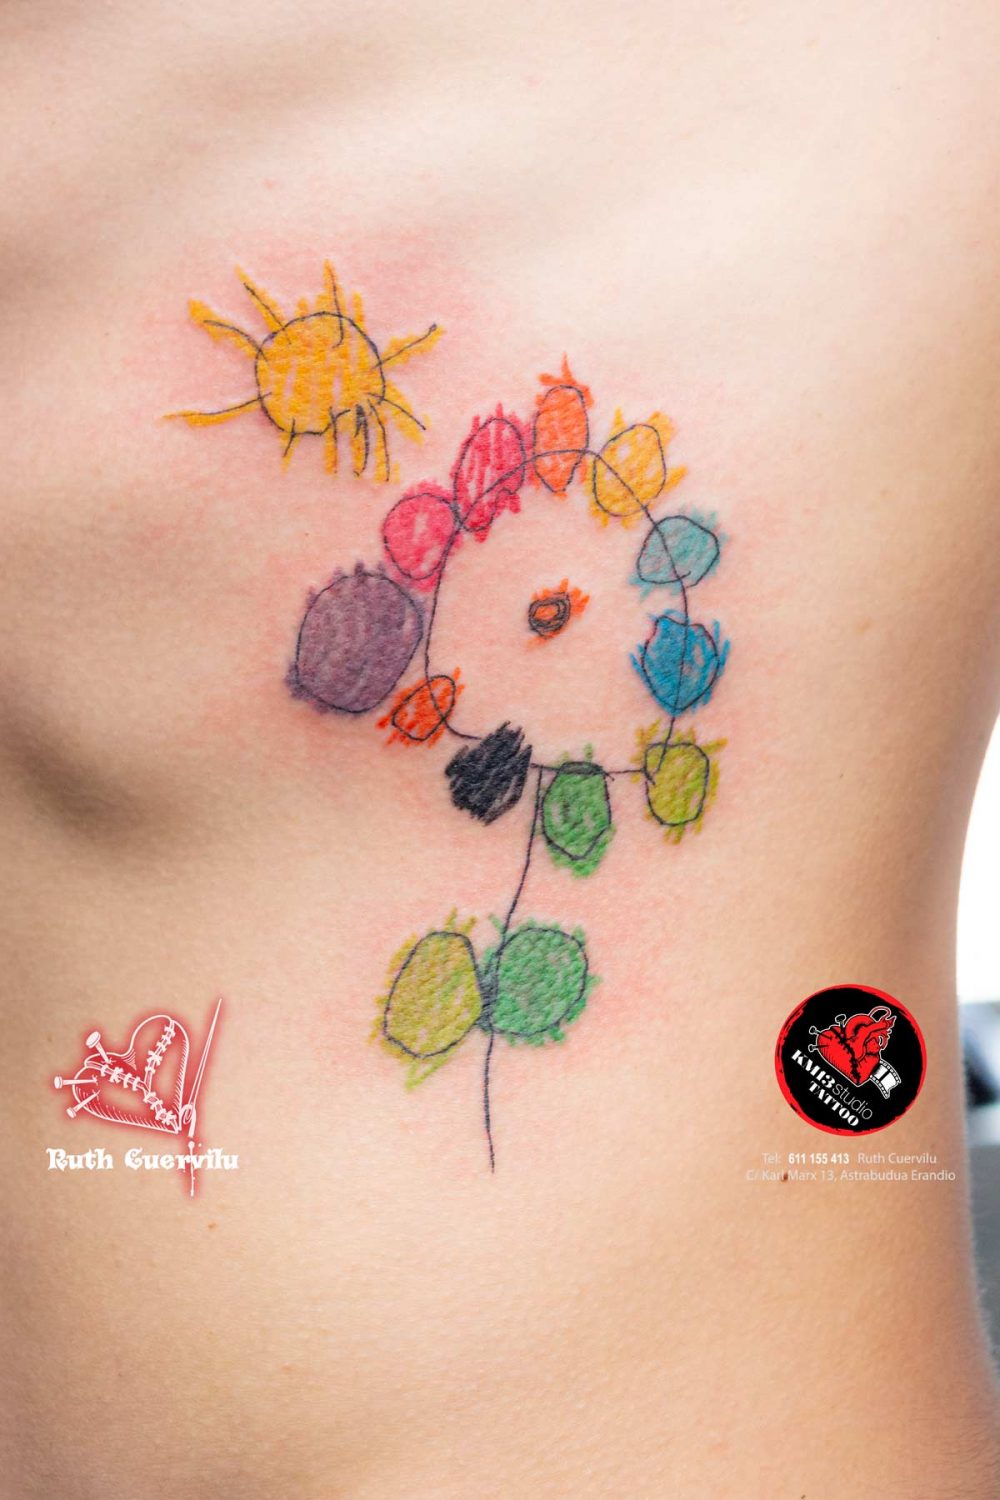 Tatuaje Flor Dibujo de mi hija - Ruth Cuervilu Tattoo - KM13 Studio - estudio de tatuajes erandio astrabudua bilbao bizkaia